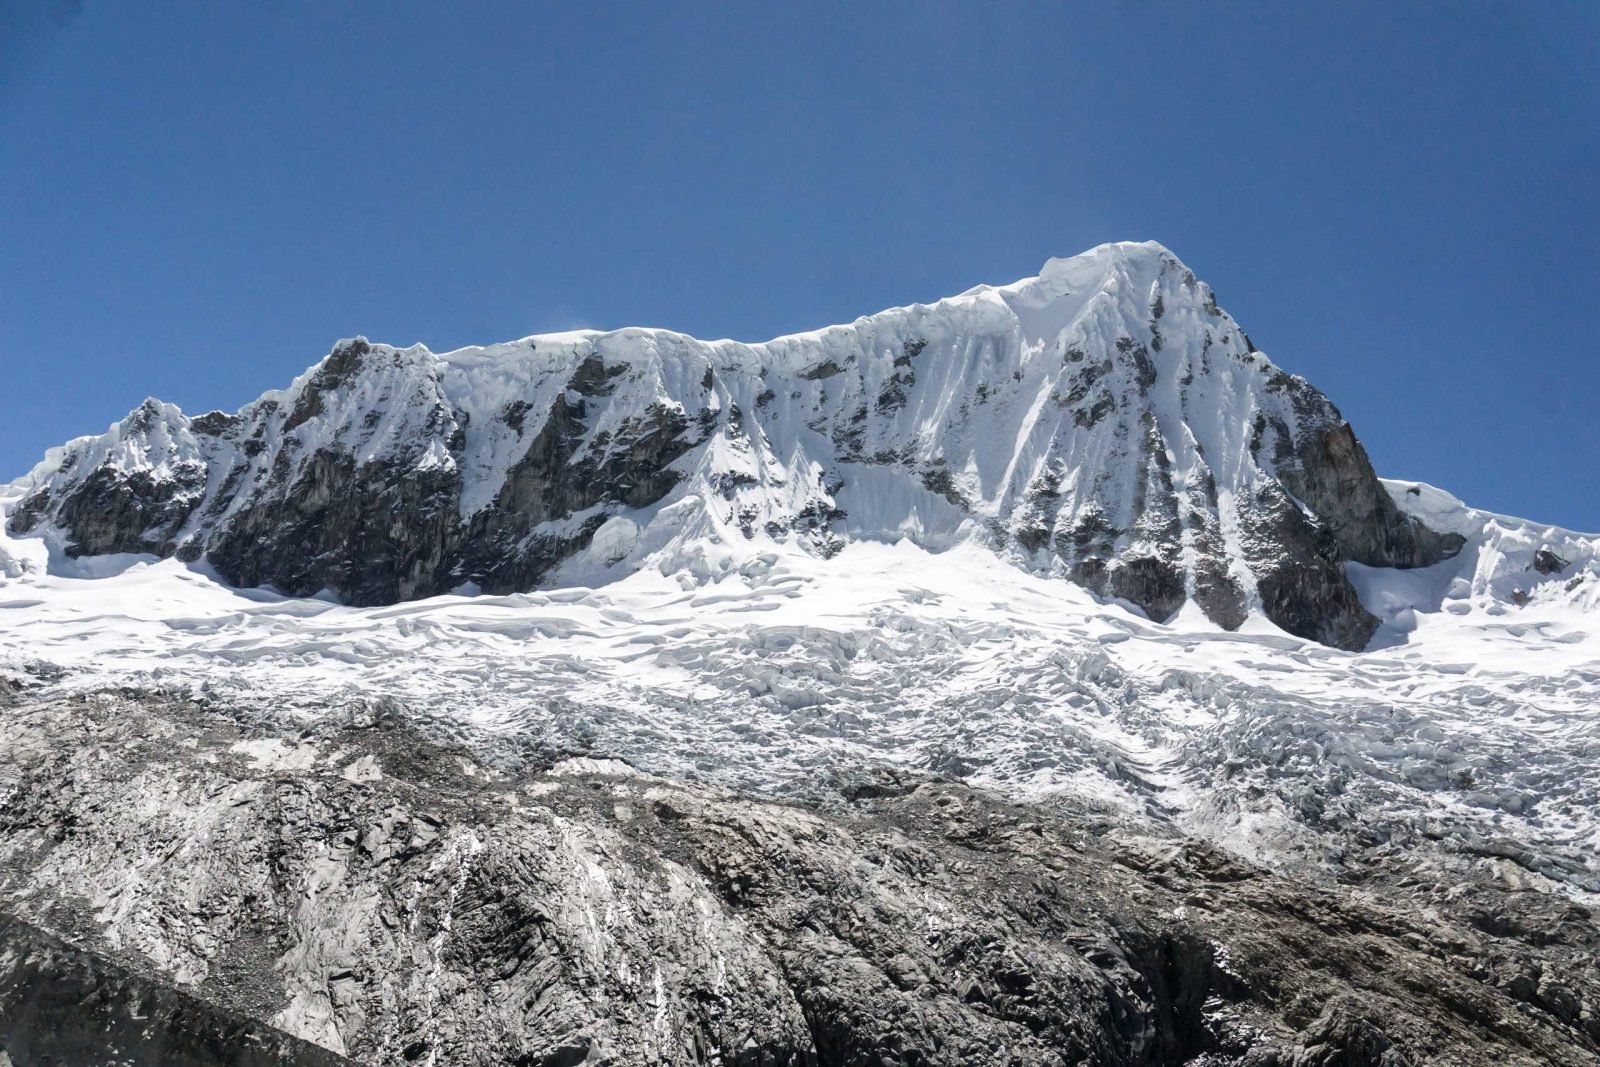 The summit of Mount Pisco, Peru.